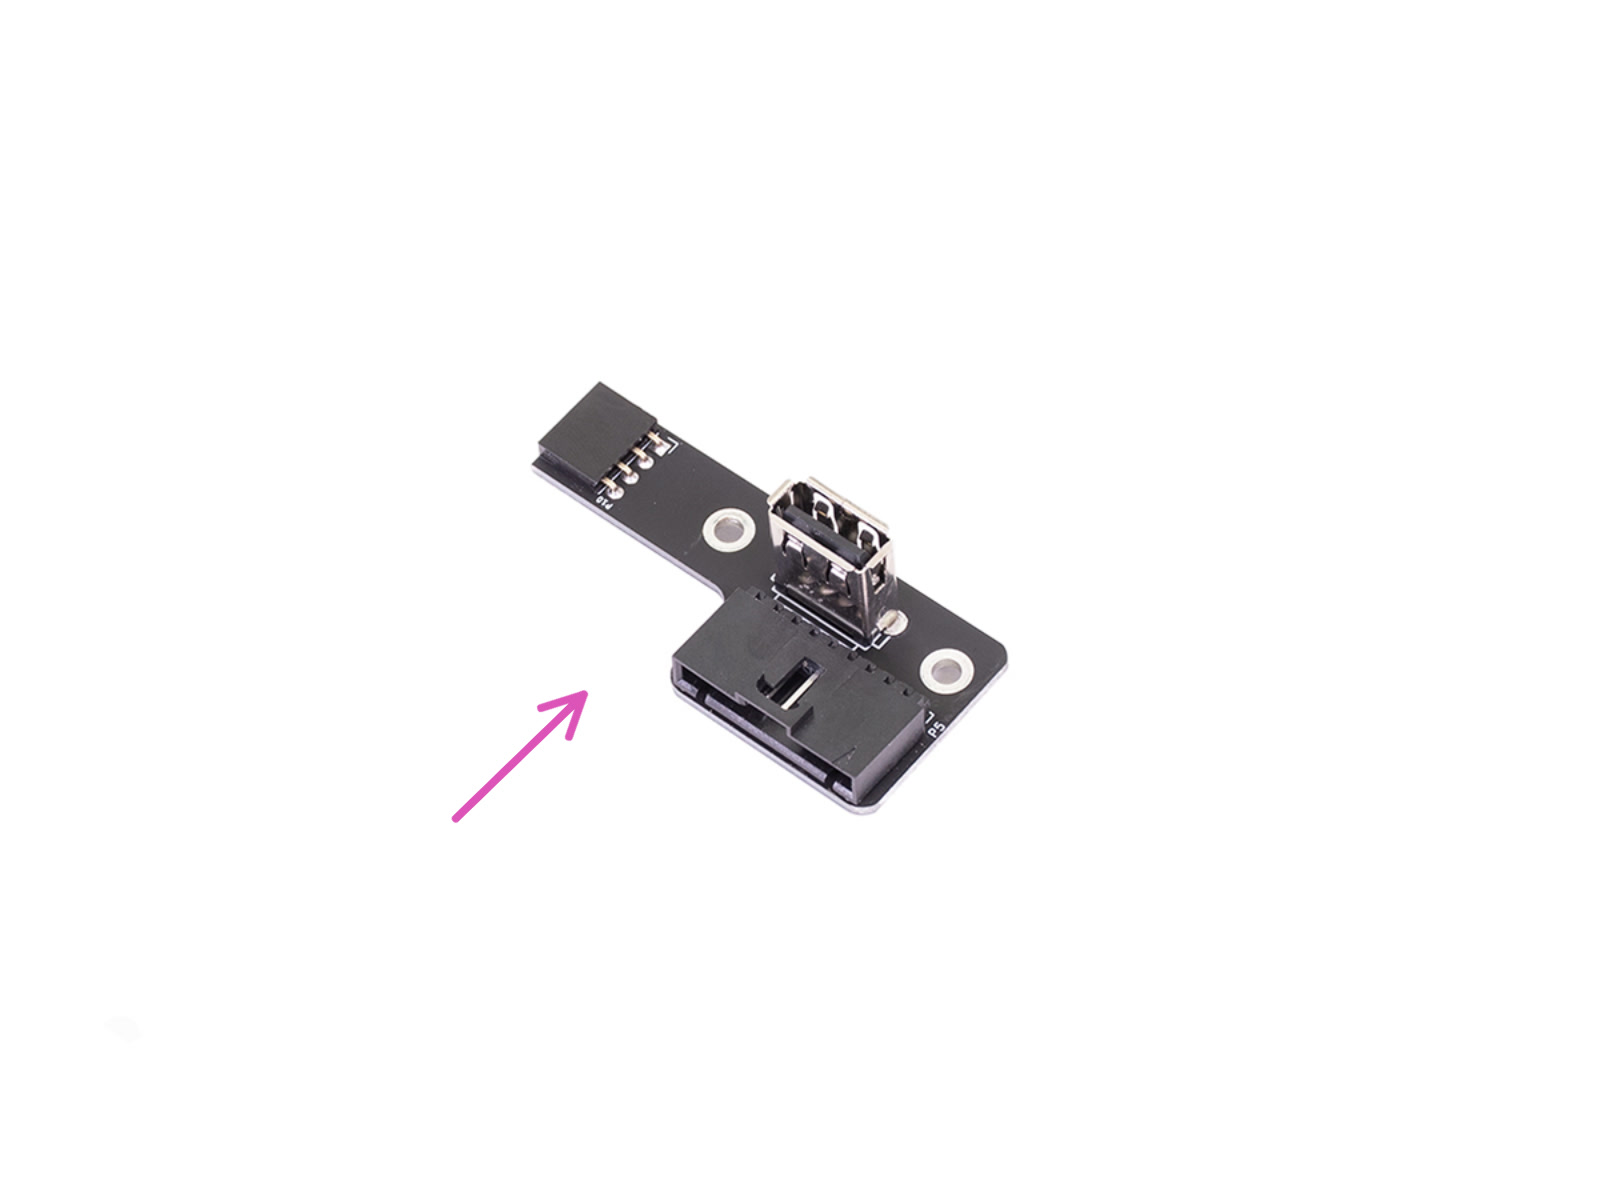 New USB connector - parts preparation (Version 3.0)